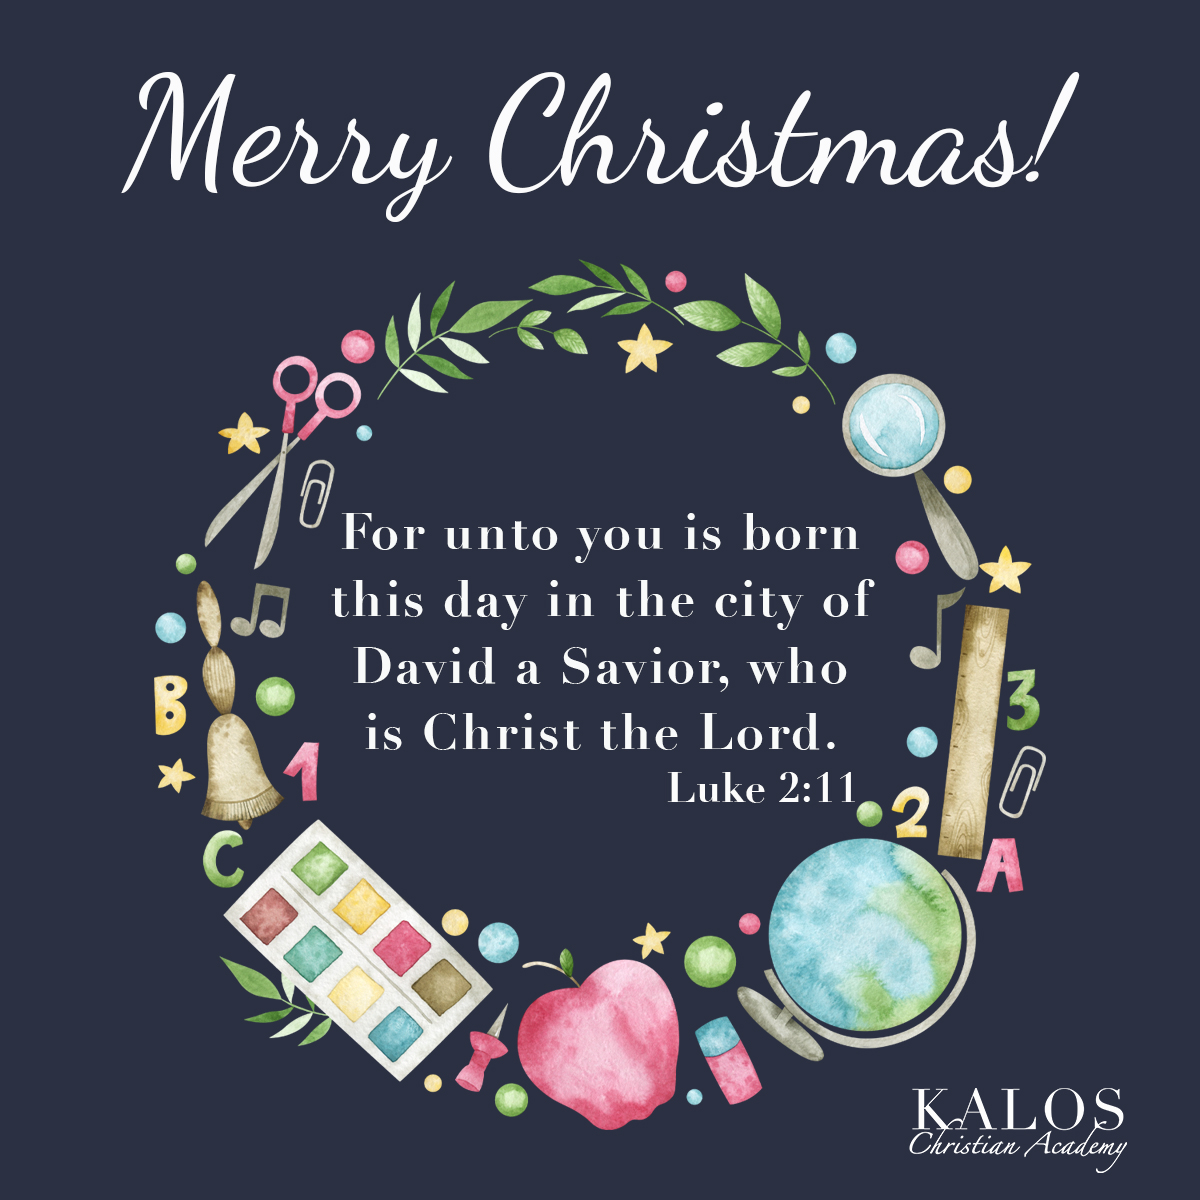 Christian School Kansas City Christmas Greeting